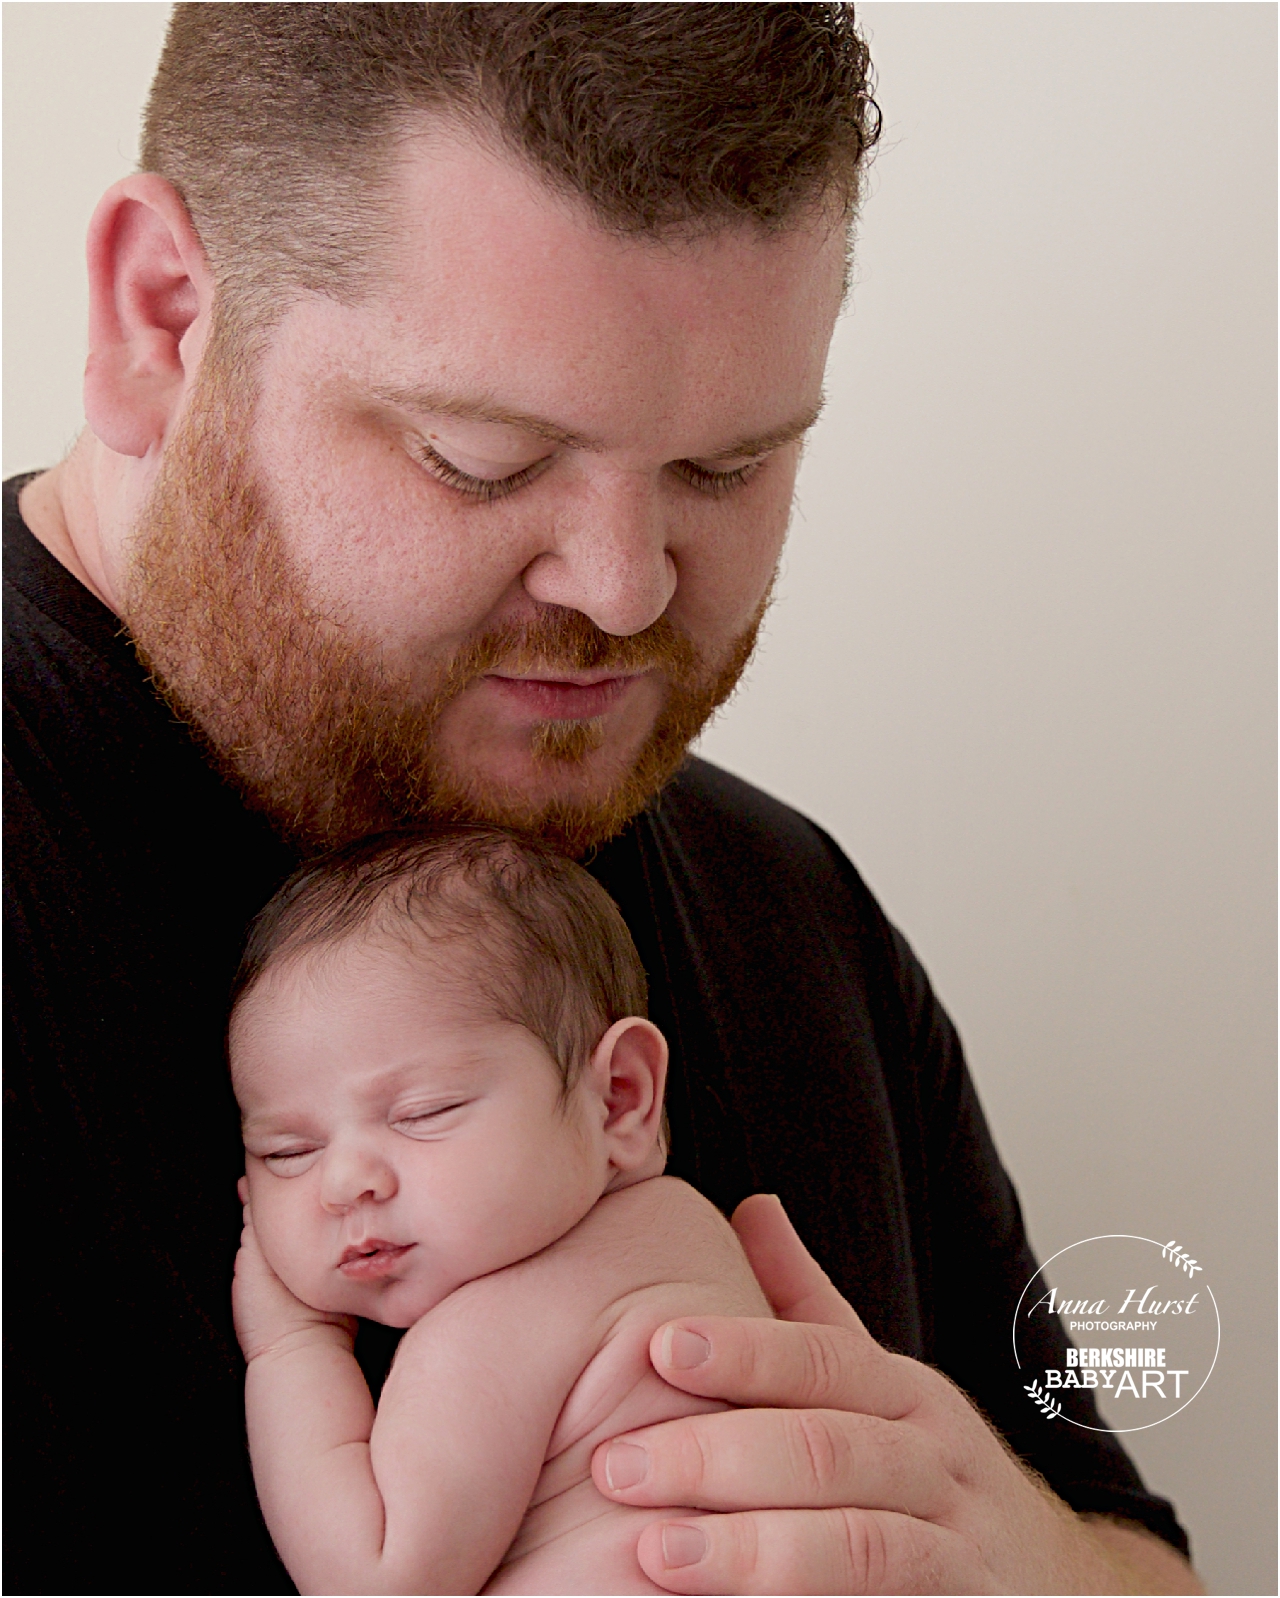 Berkshire Newborn Photography